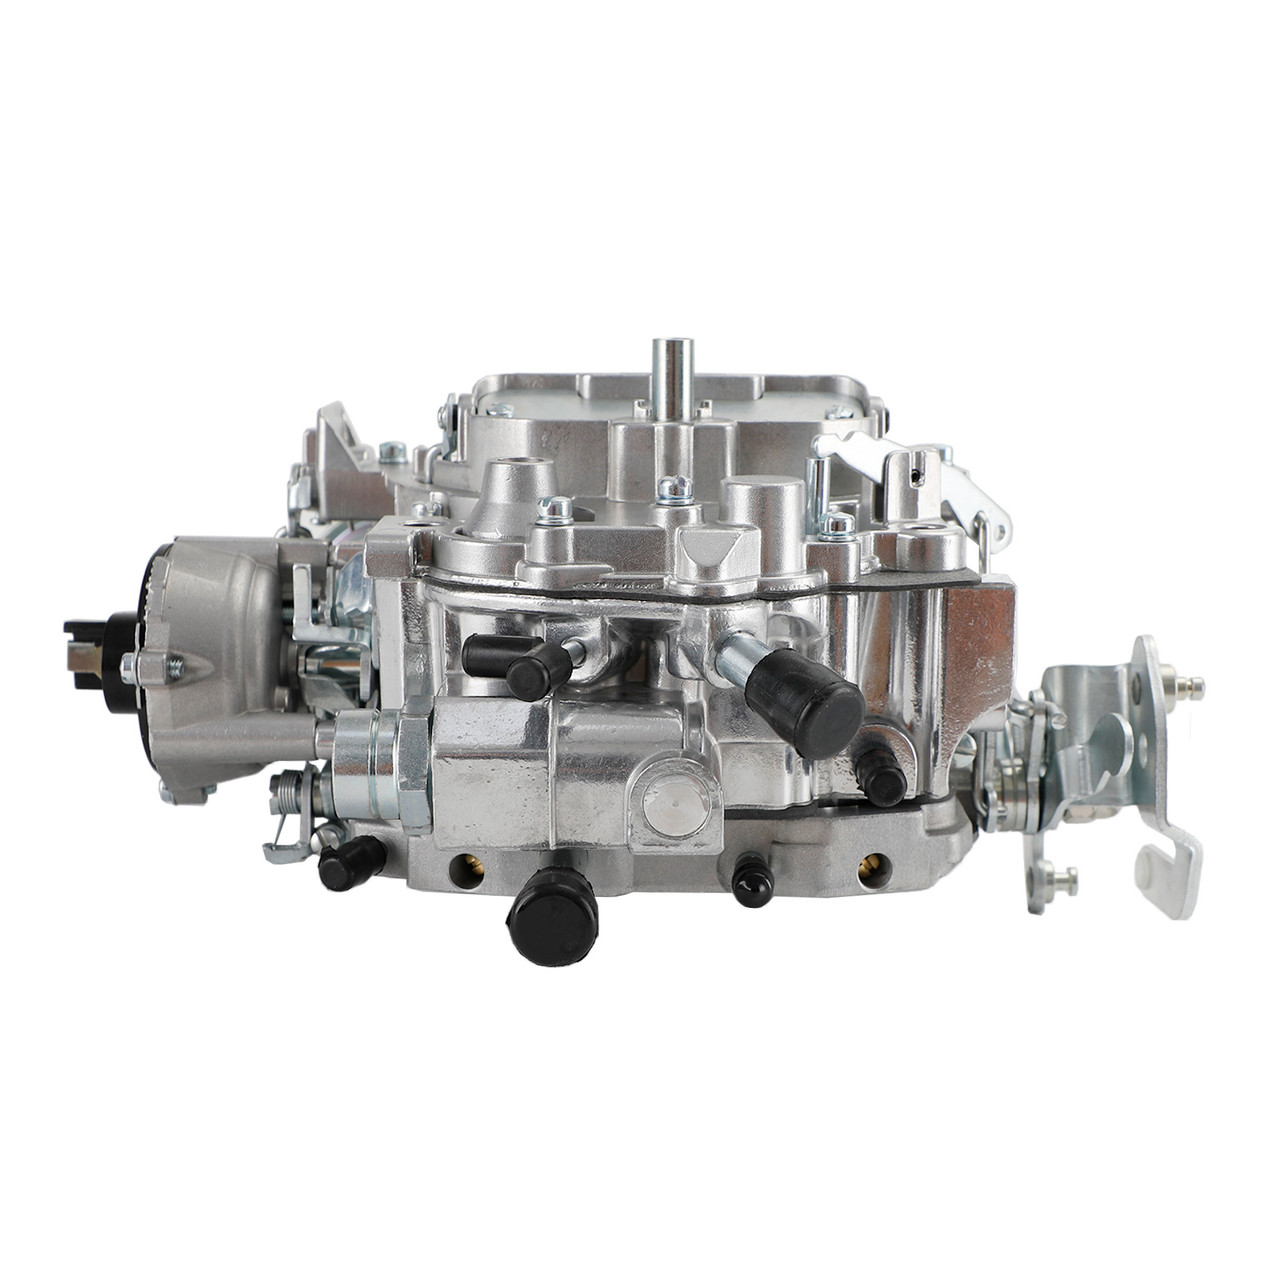 Rochester 650 CFM 305-350 Engines 650 CFM Electric Choke Quadrajet 4 BBL Carburetor 1904R 17066422